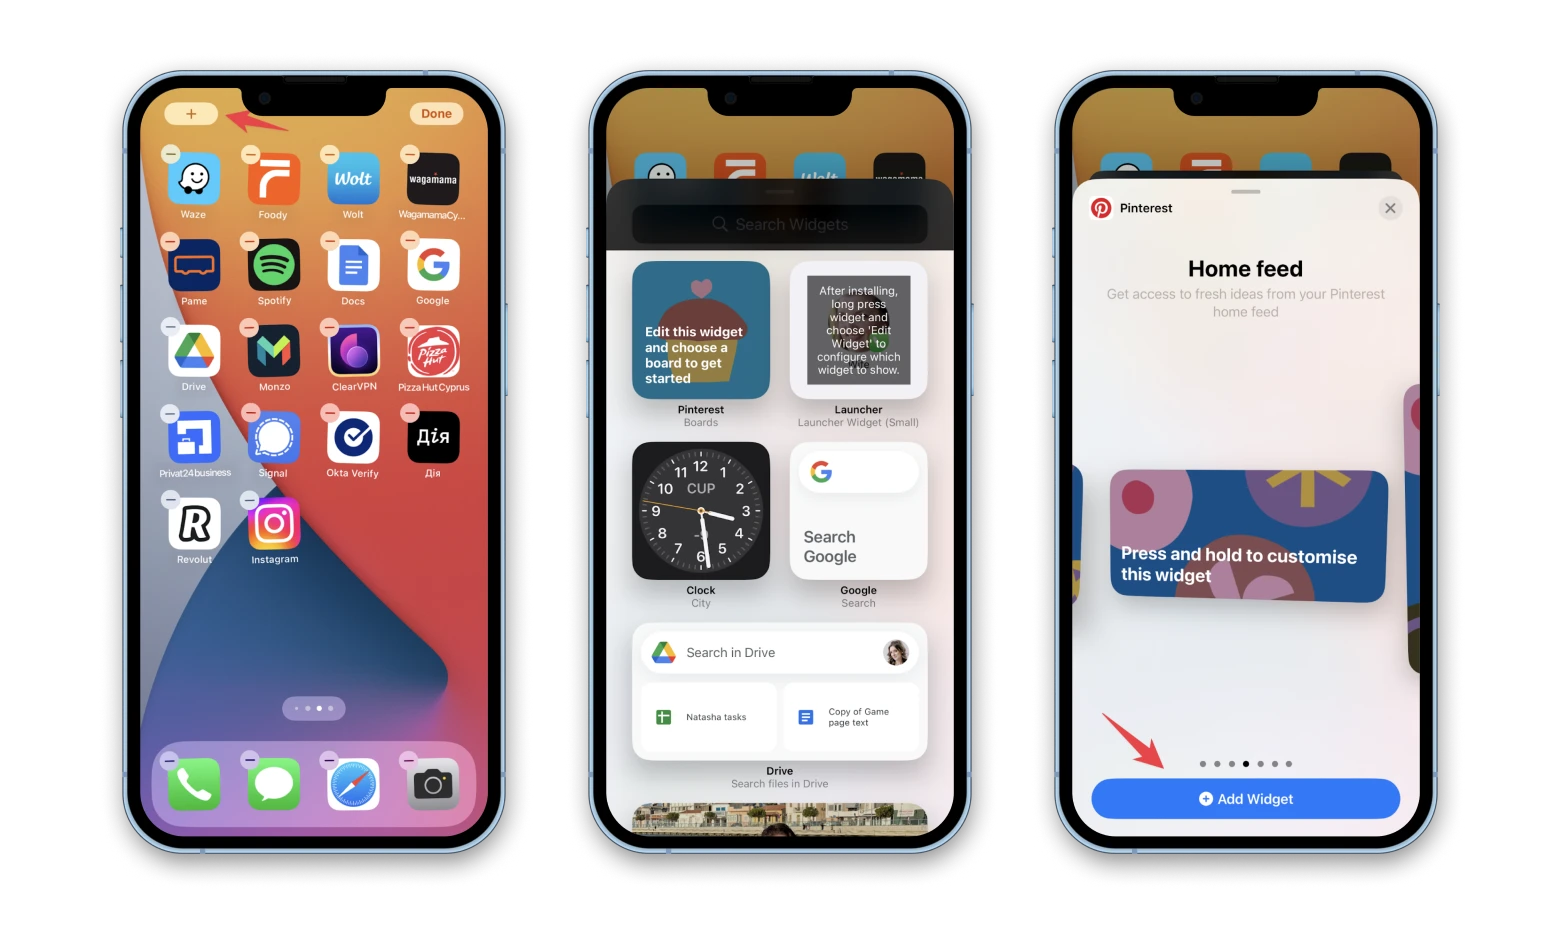 Add Widget to iPhone's Home Screen